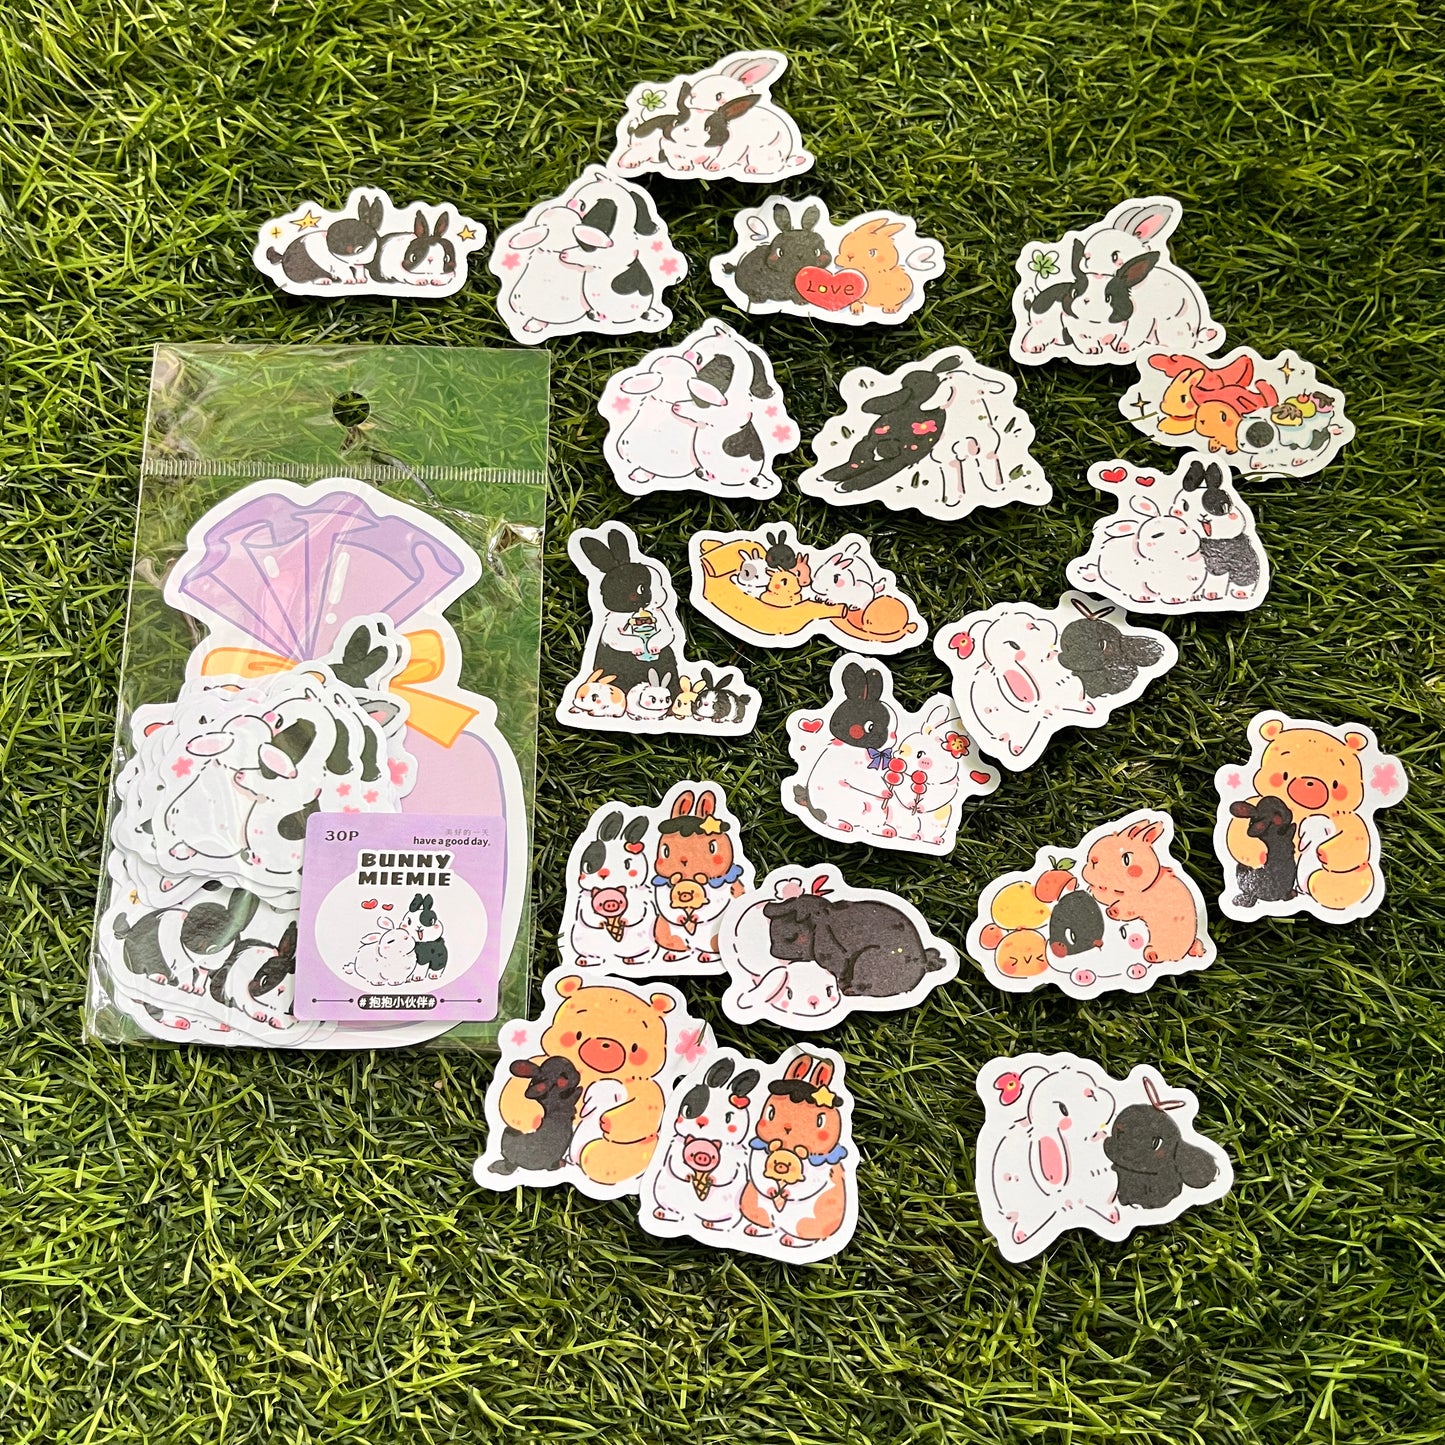 30 pcs cute miemie kawaii Rabbit theme washi paper stickers.